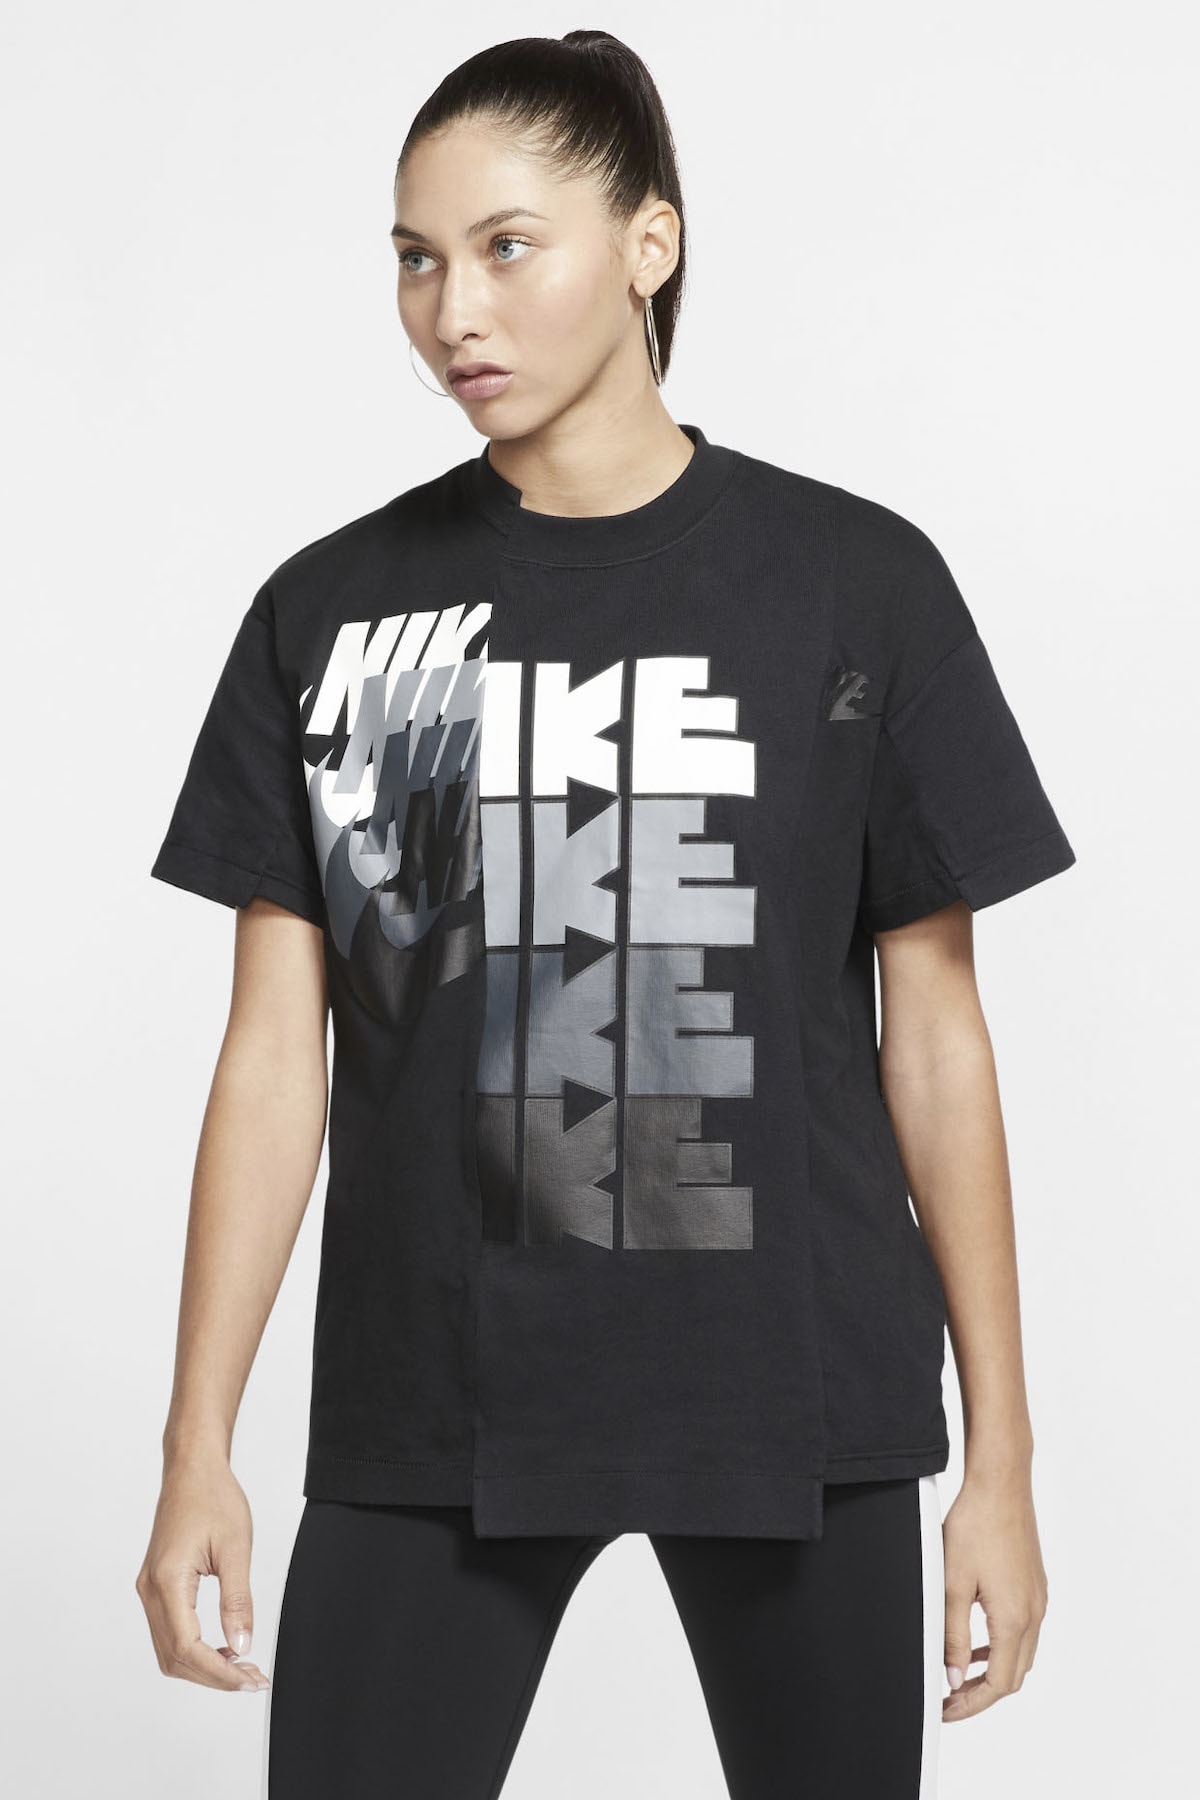 sacai x Nike Apparel Collection Collaboration | Hypebae